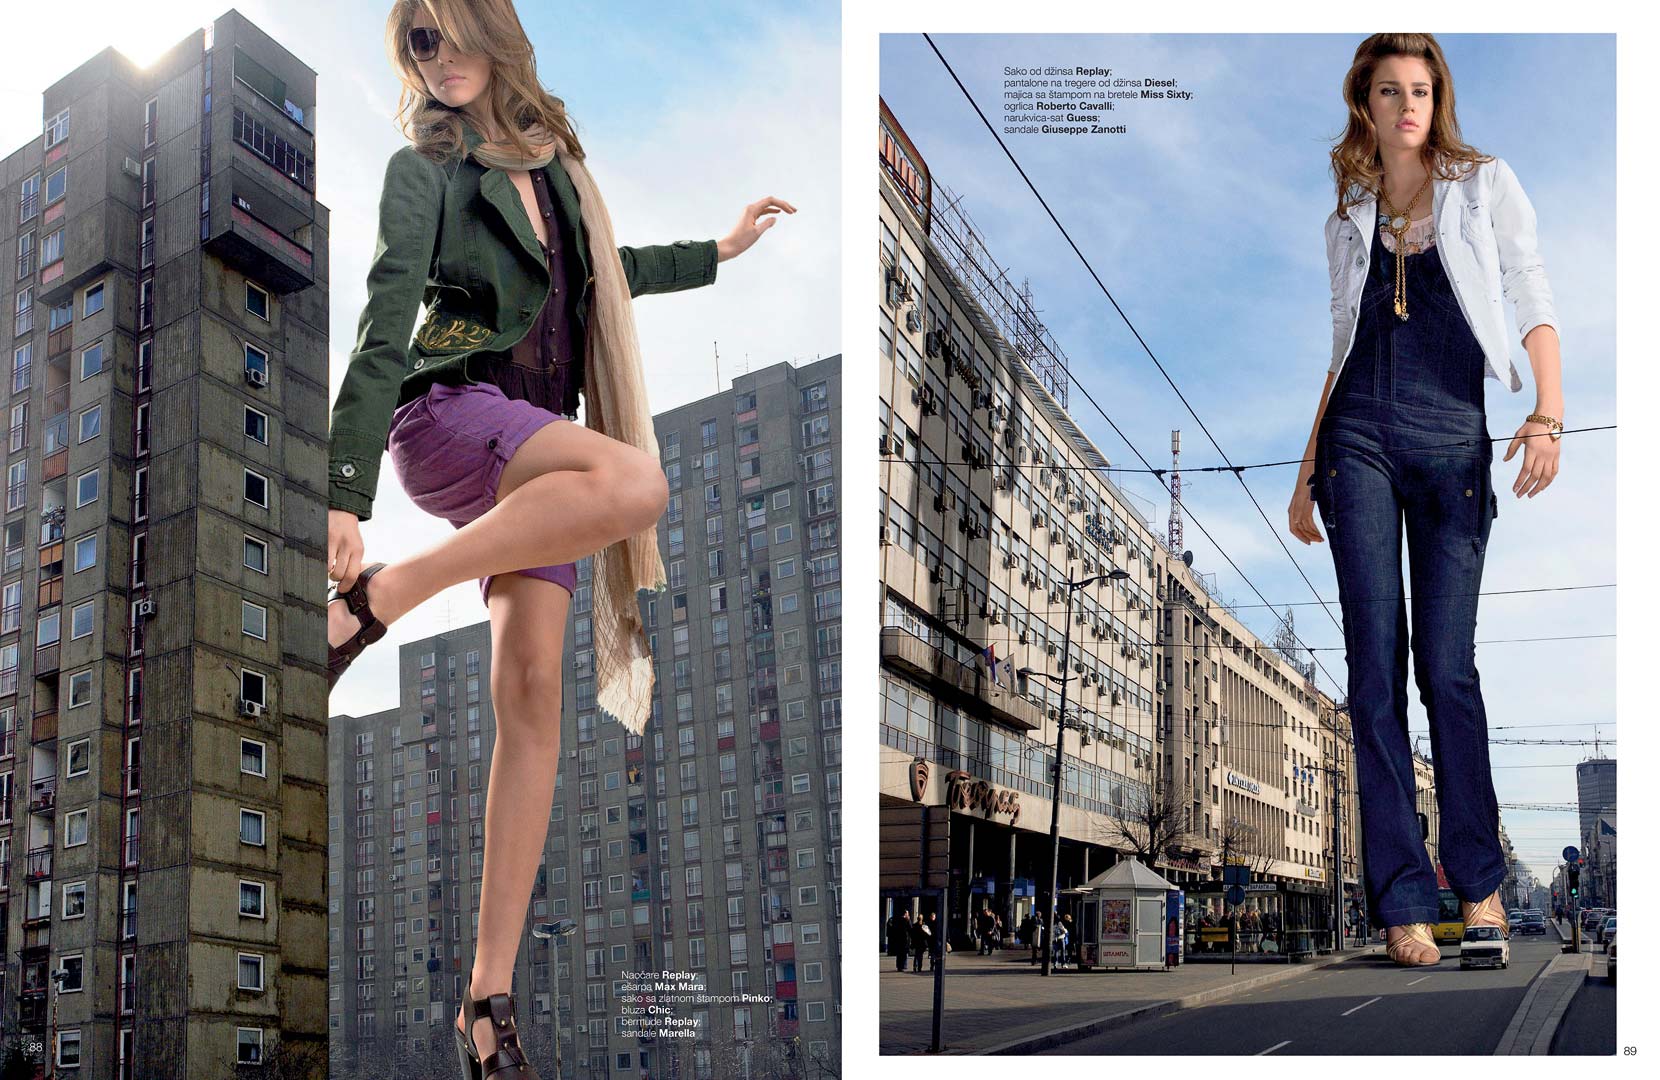 GRAZIA magazine, fashion editorial, fashion editor & styling: Lara Milanovic